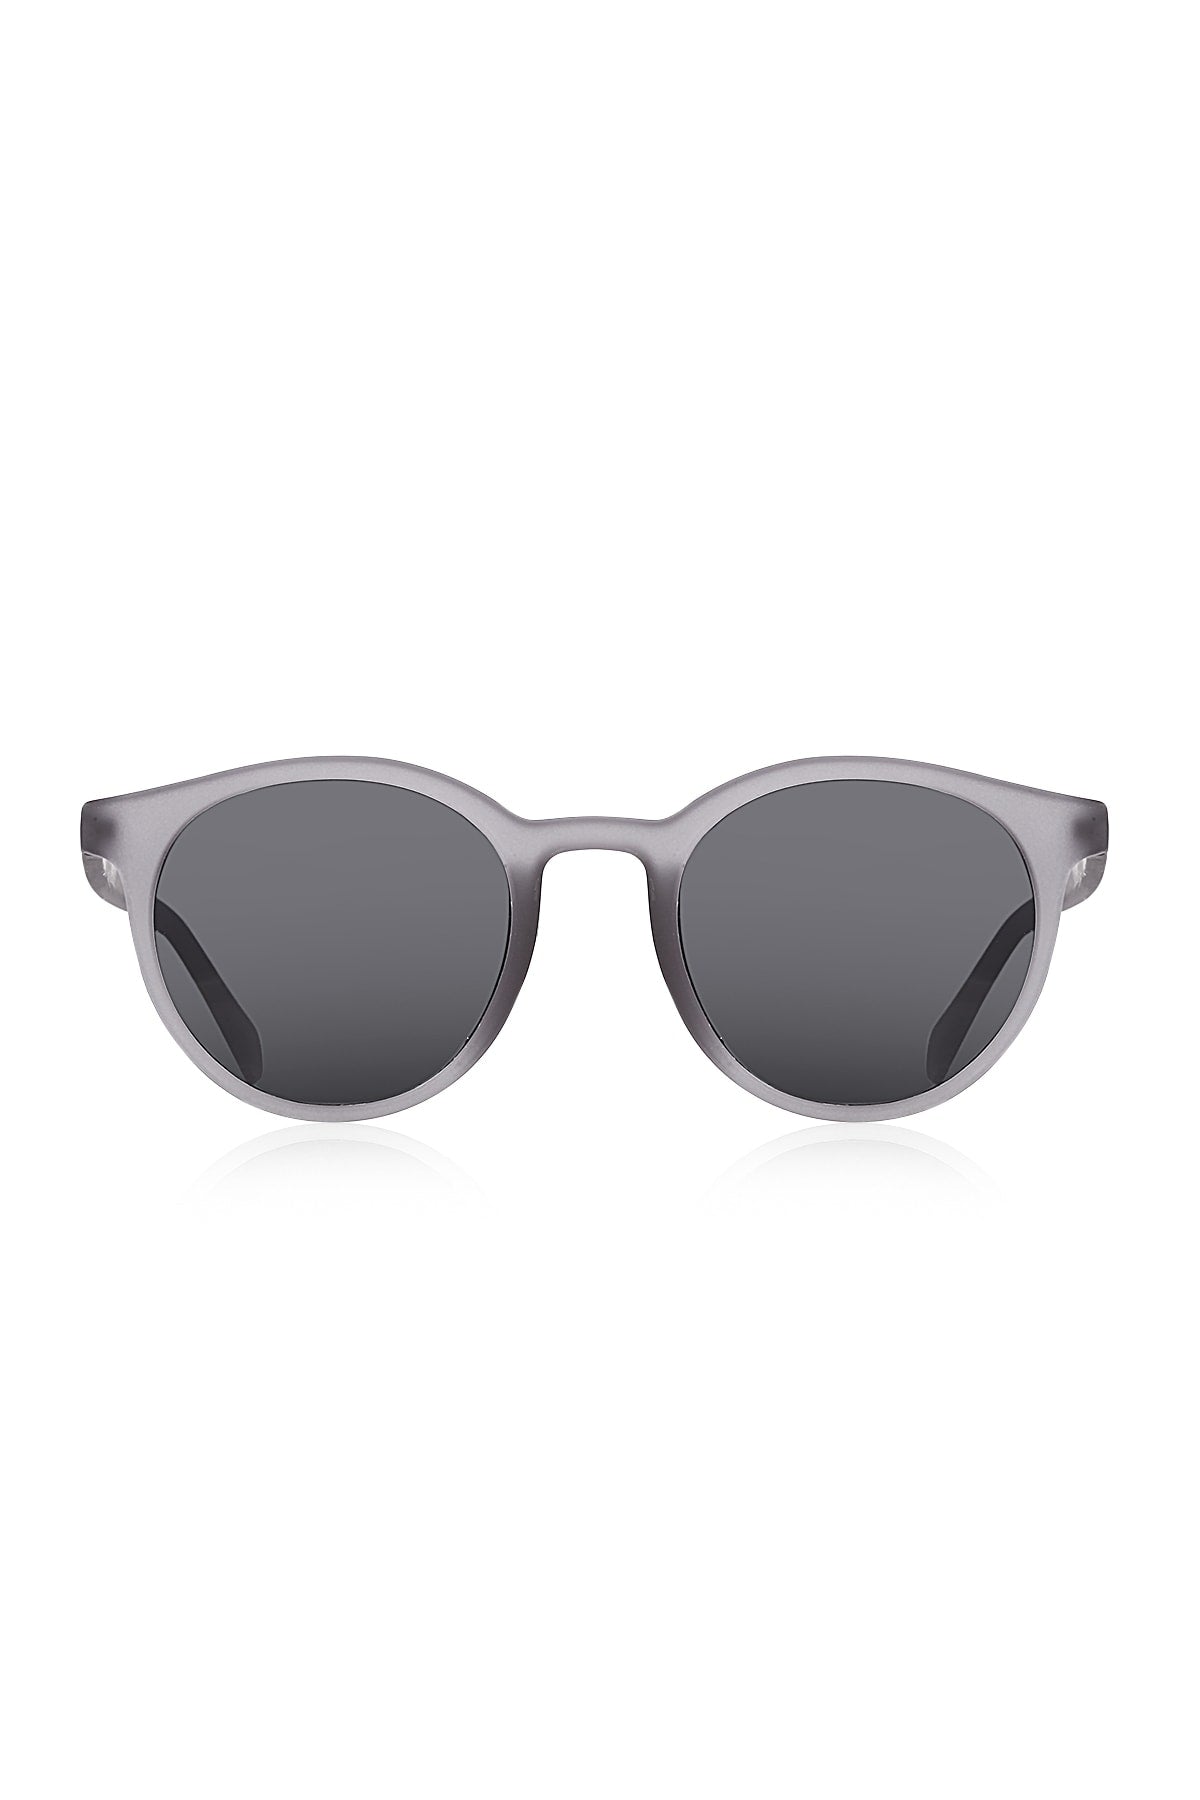 New Trend Unisex Sunglasses Transparent Smoked 2026